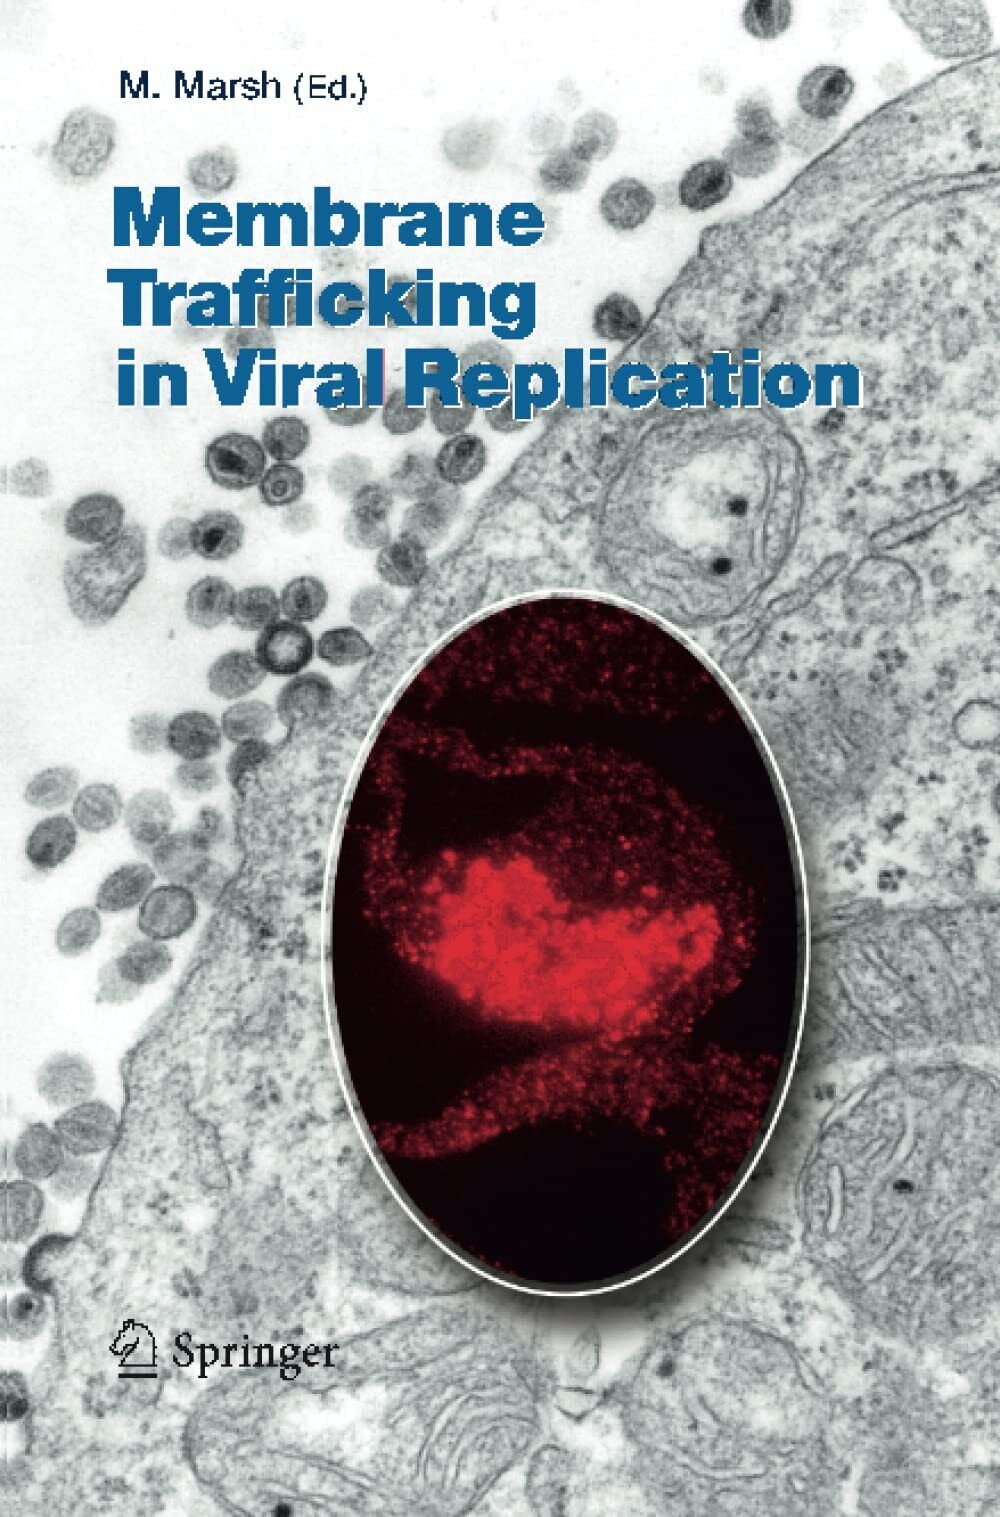 Membrane Trafficking in Viral Replication - various - Springer, 2010